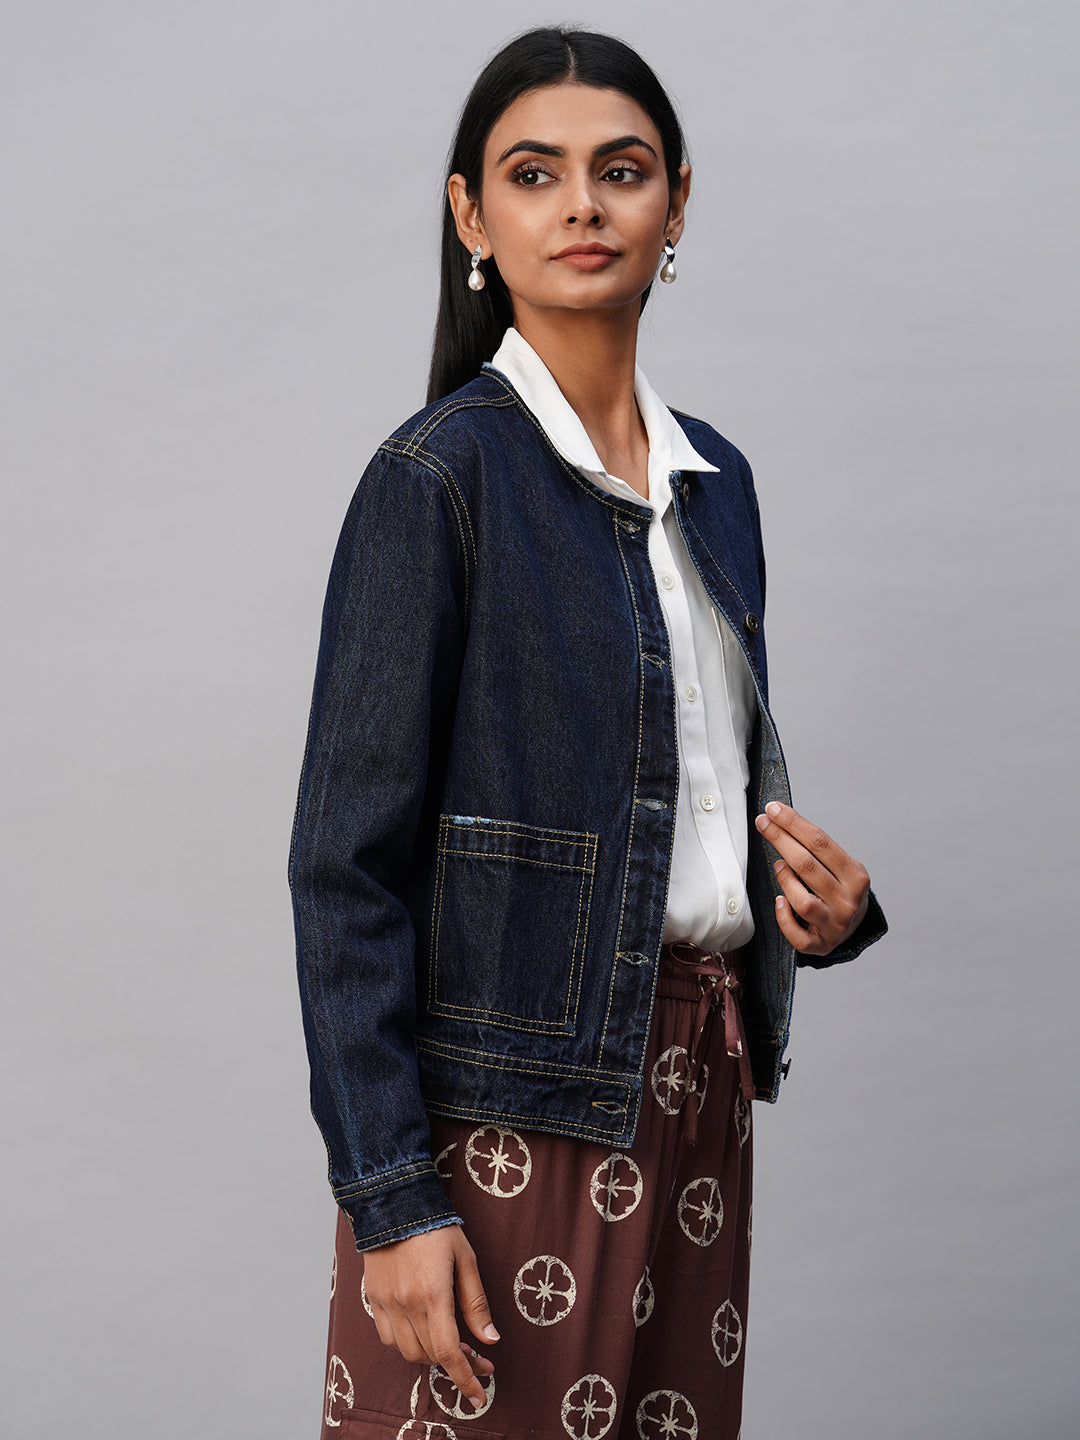 Denim jacket styling ideas || Trendy new ways to Wear a Kurtis with jean  jacket - YouTube